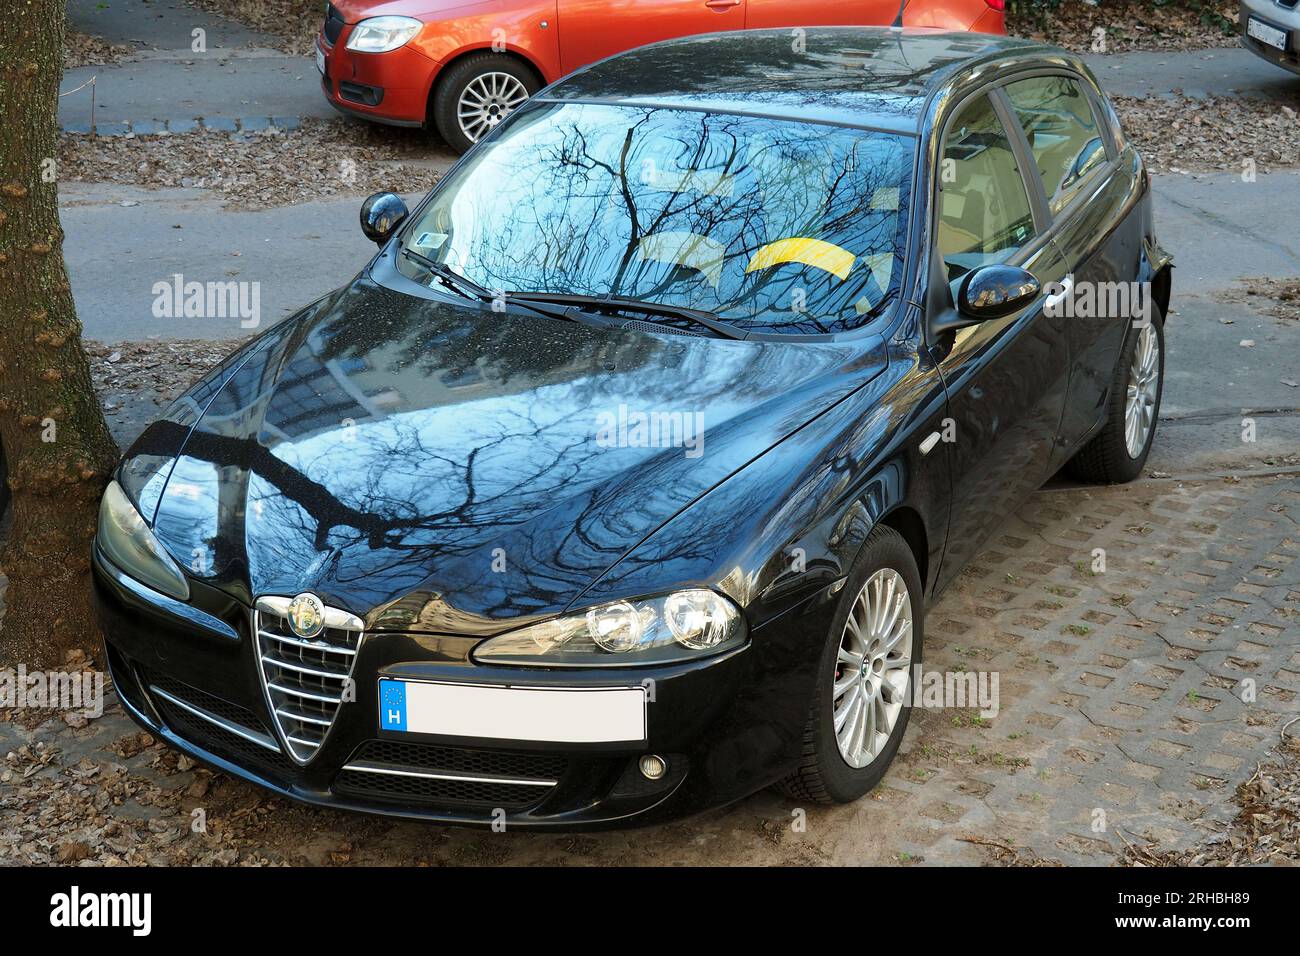 Is Alfa Romeo Popular in Europe?